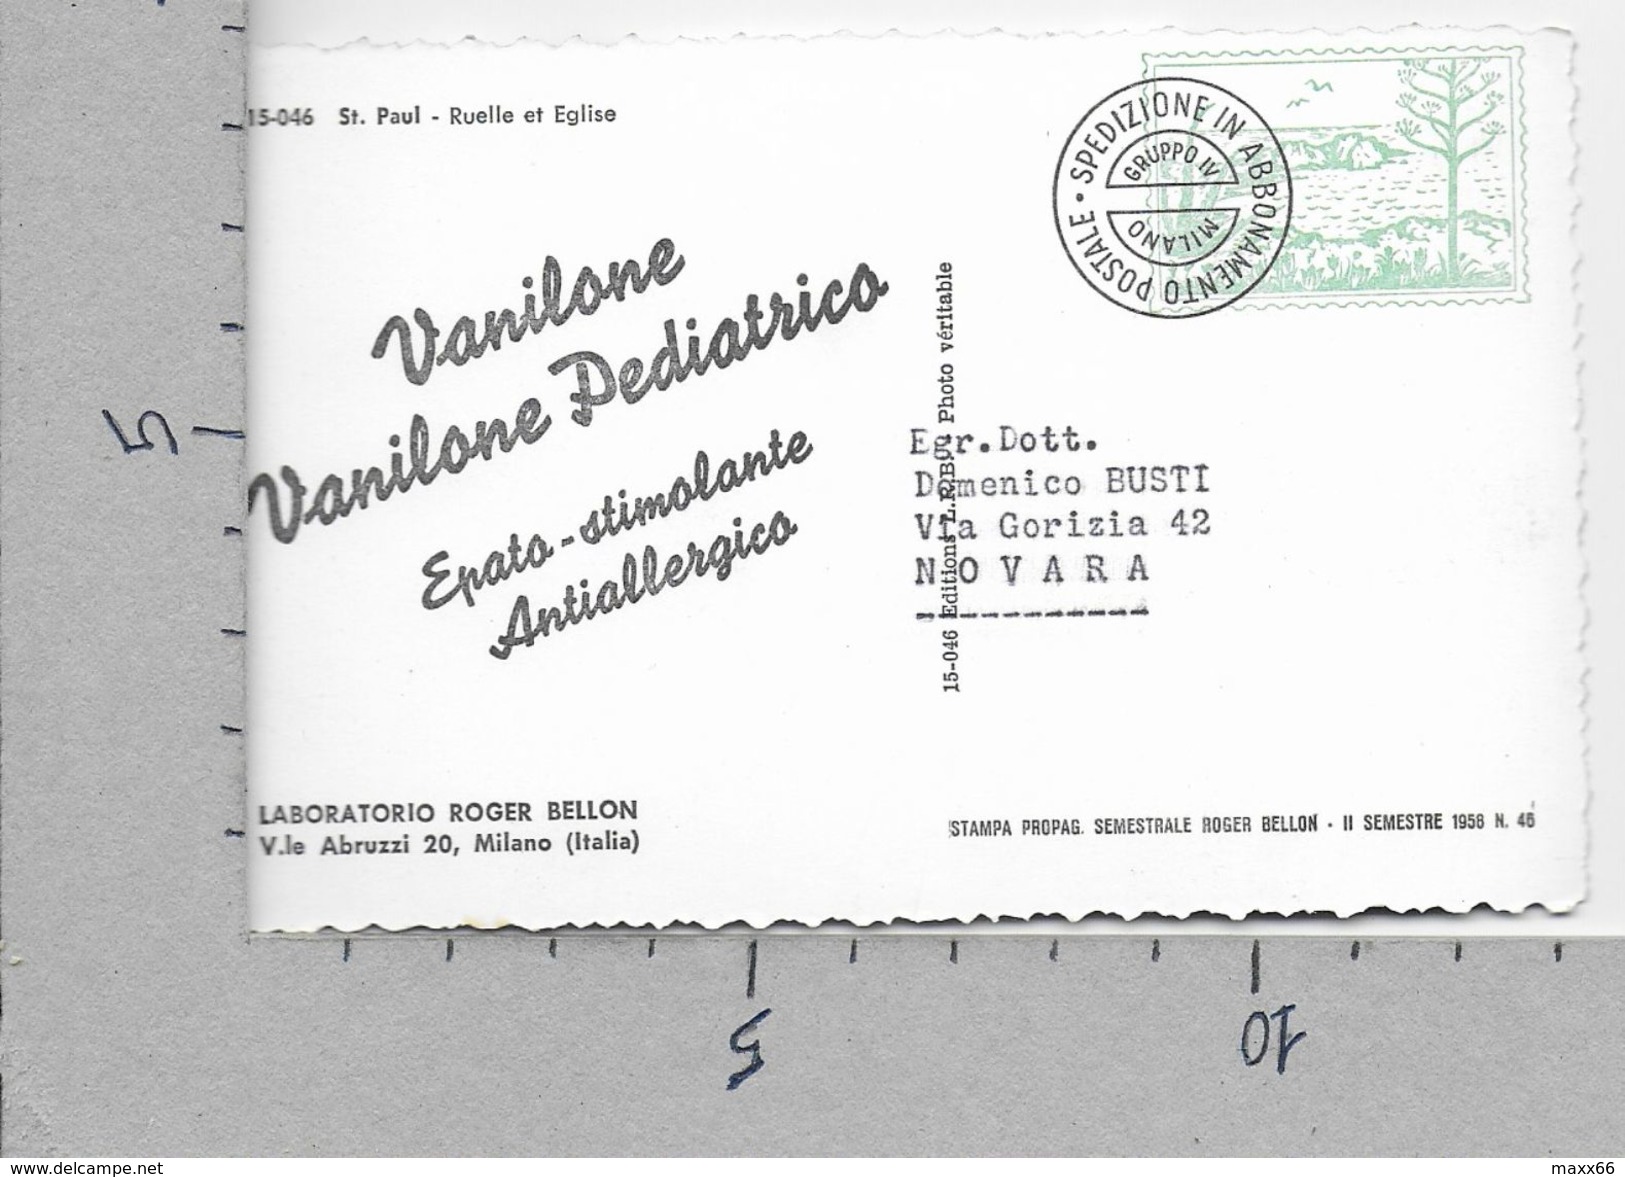 CARTOLINA VG FRANCIA - PUBBLICITARIA - St PAUL - Ruelle Et Eglise - VANILONE PEDIATRICO - 9 X 14 - ANN. 1958 - Saint-Paul